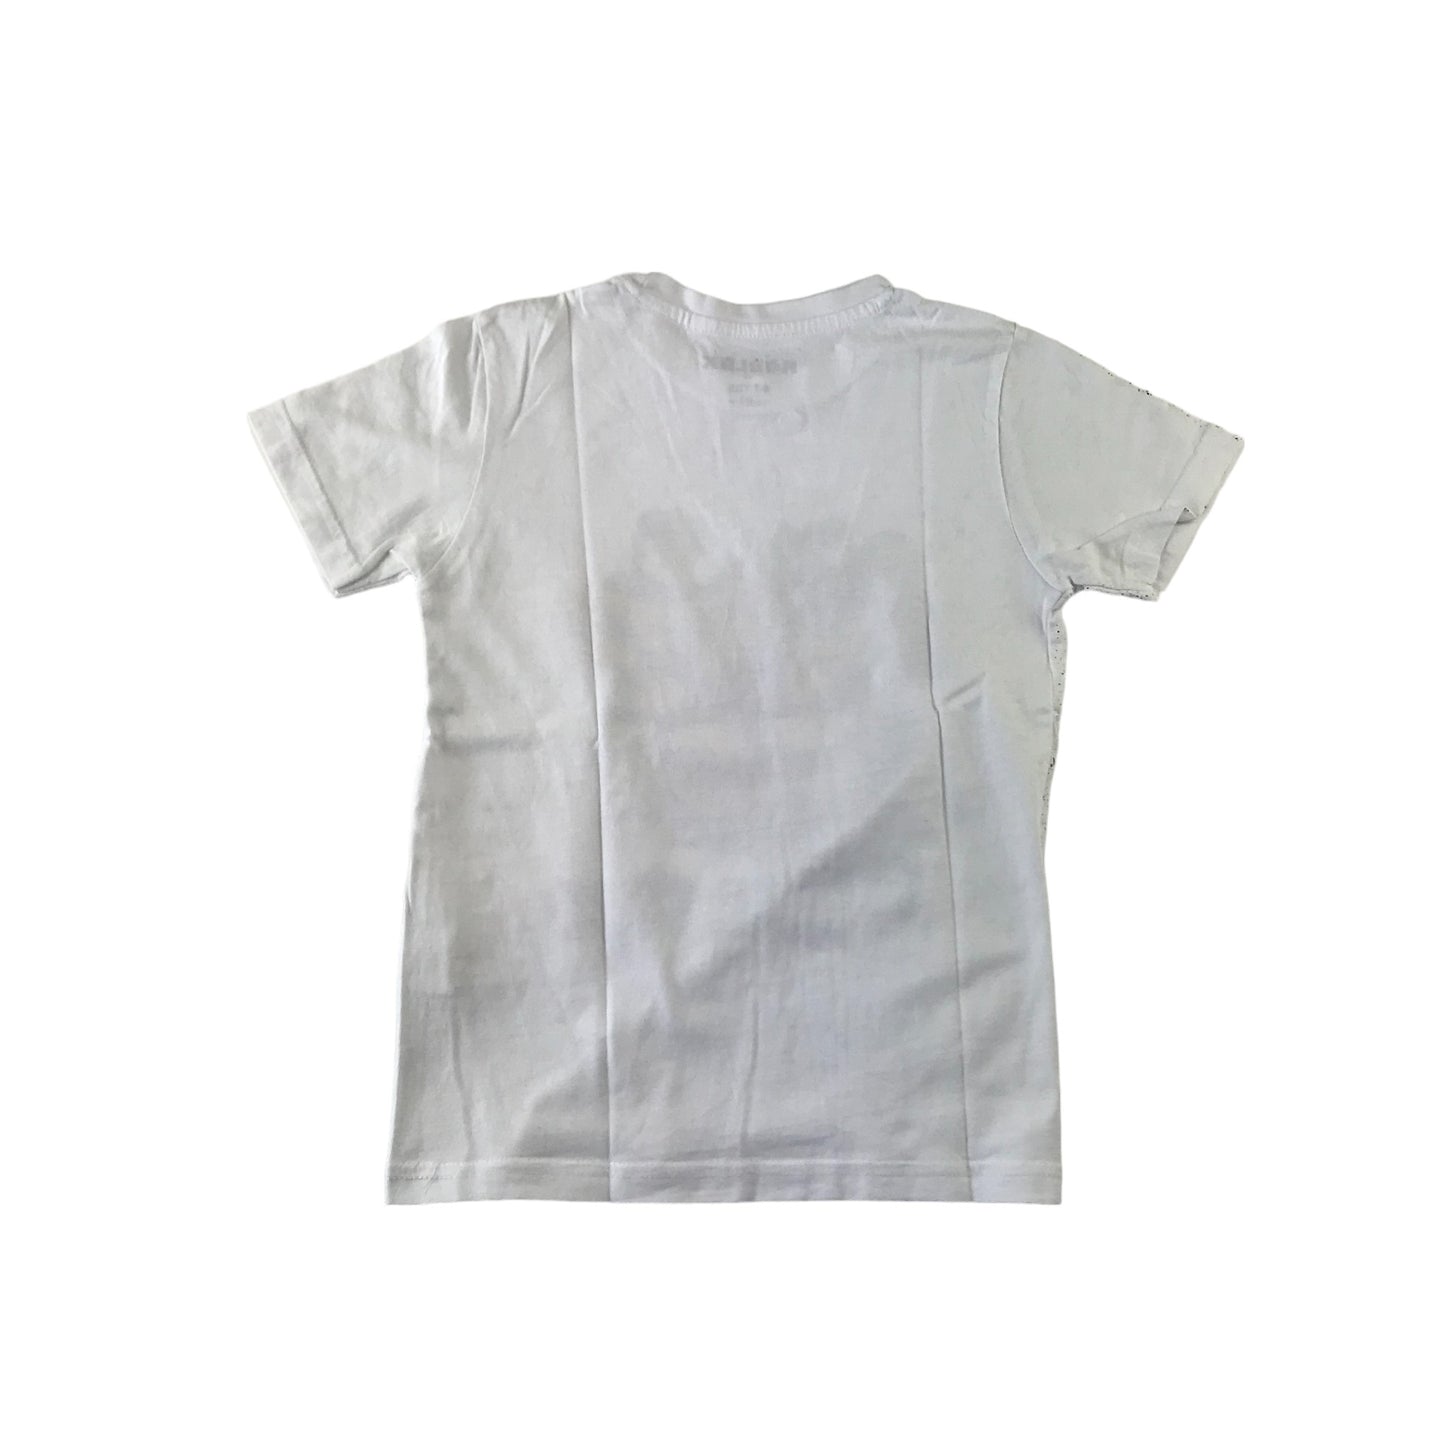 Roblox T-shirt Age 6 White Splash Pattern Golden Characters Print Cotton